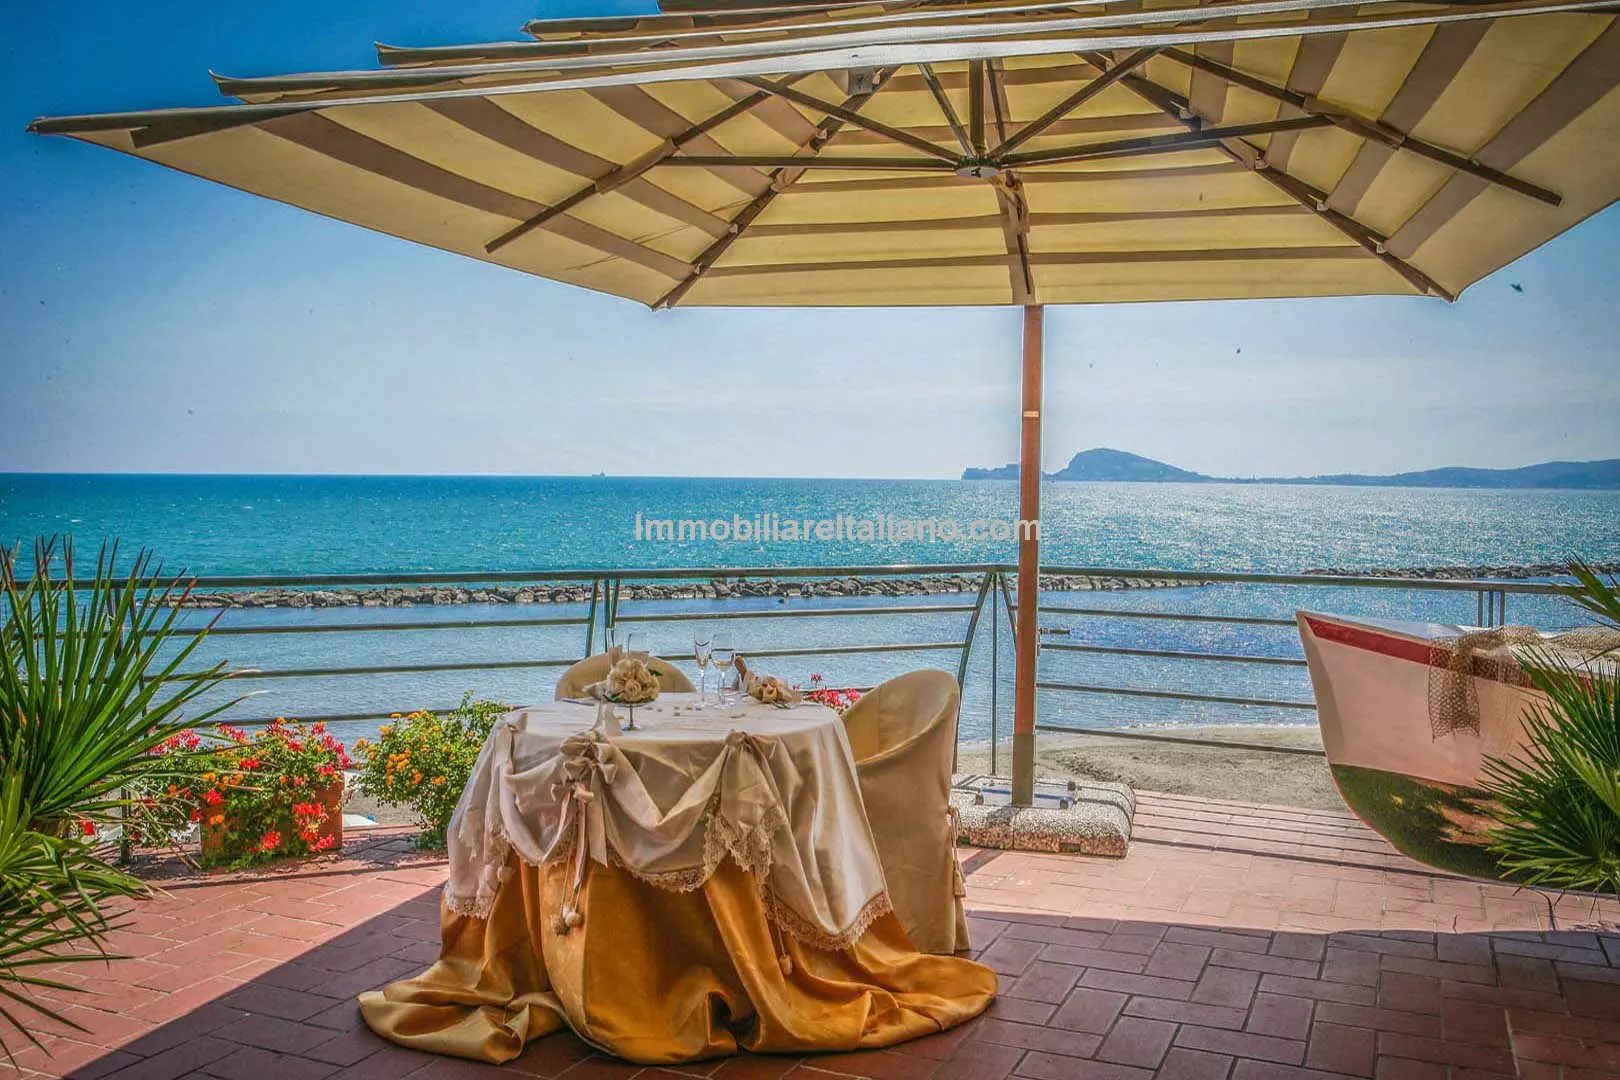 Hotel in Italy for sale – Formia Gulf of Gaeta